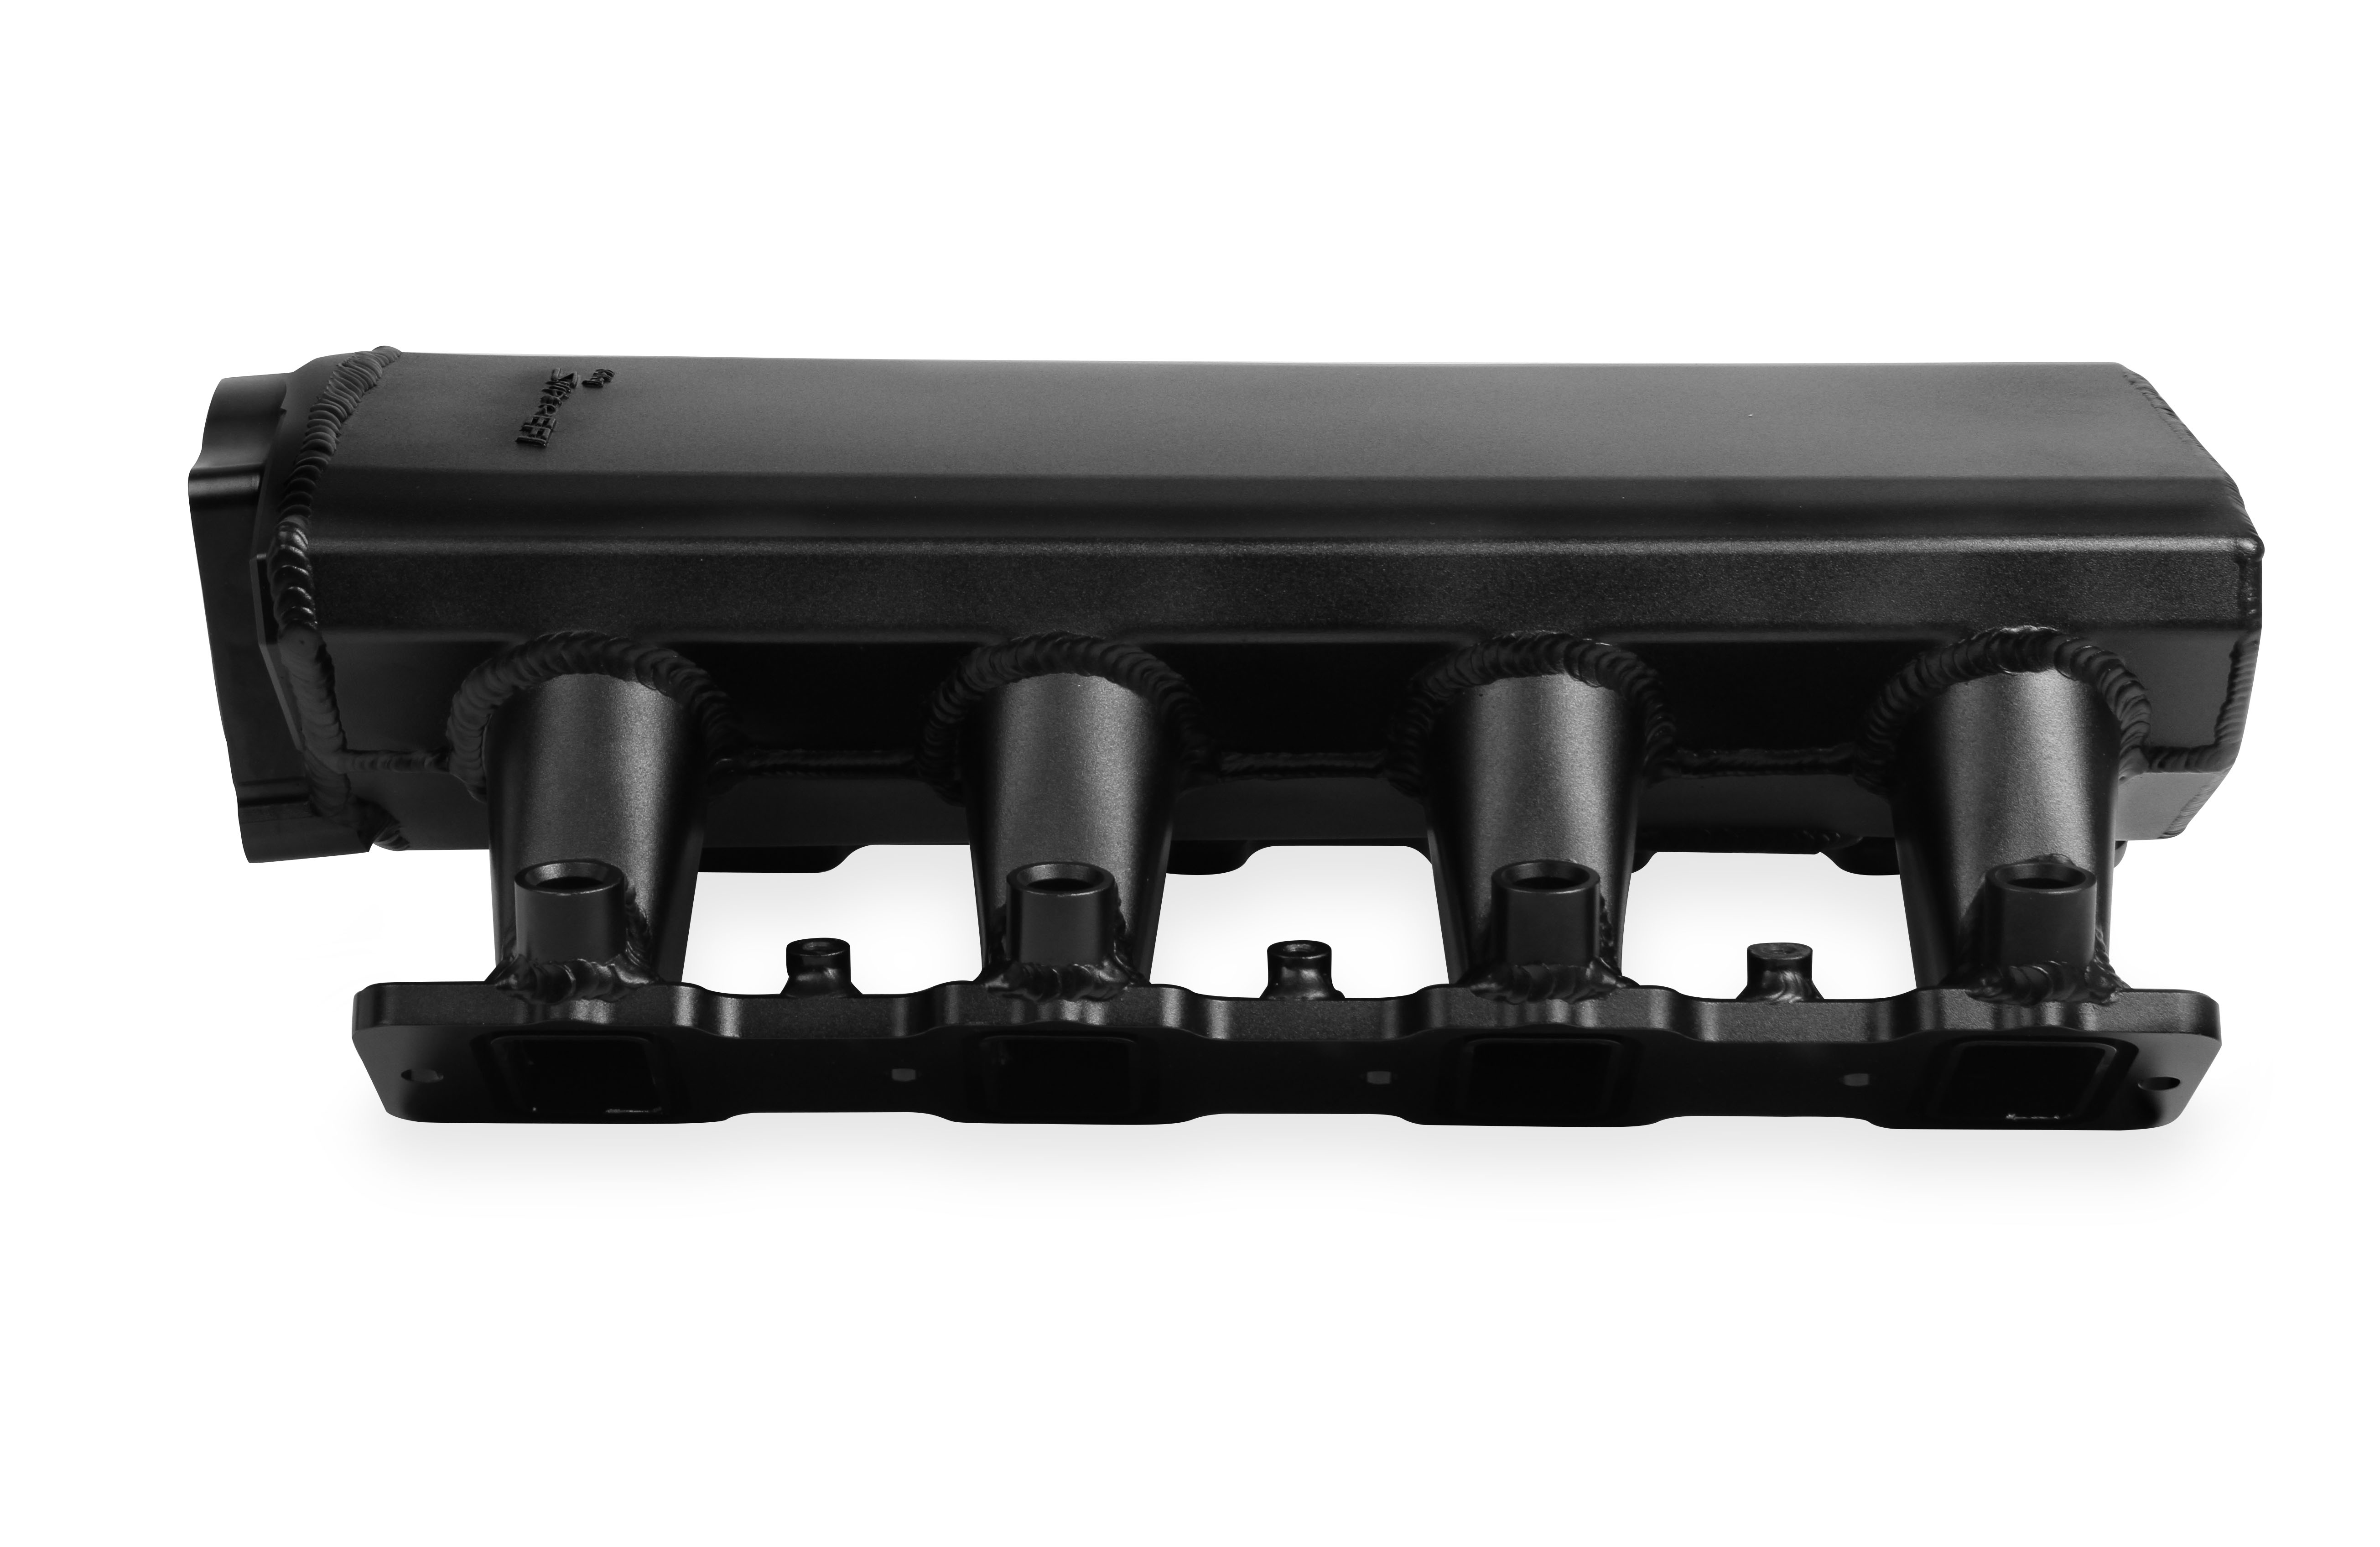 LS1/LS2/LS6 Holley 102mm Sniper EFI Low-Profile Sheet Metal Fabricated Intake Manifold w/Fuel Rail Kit - Black